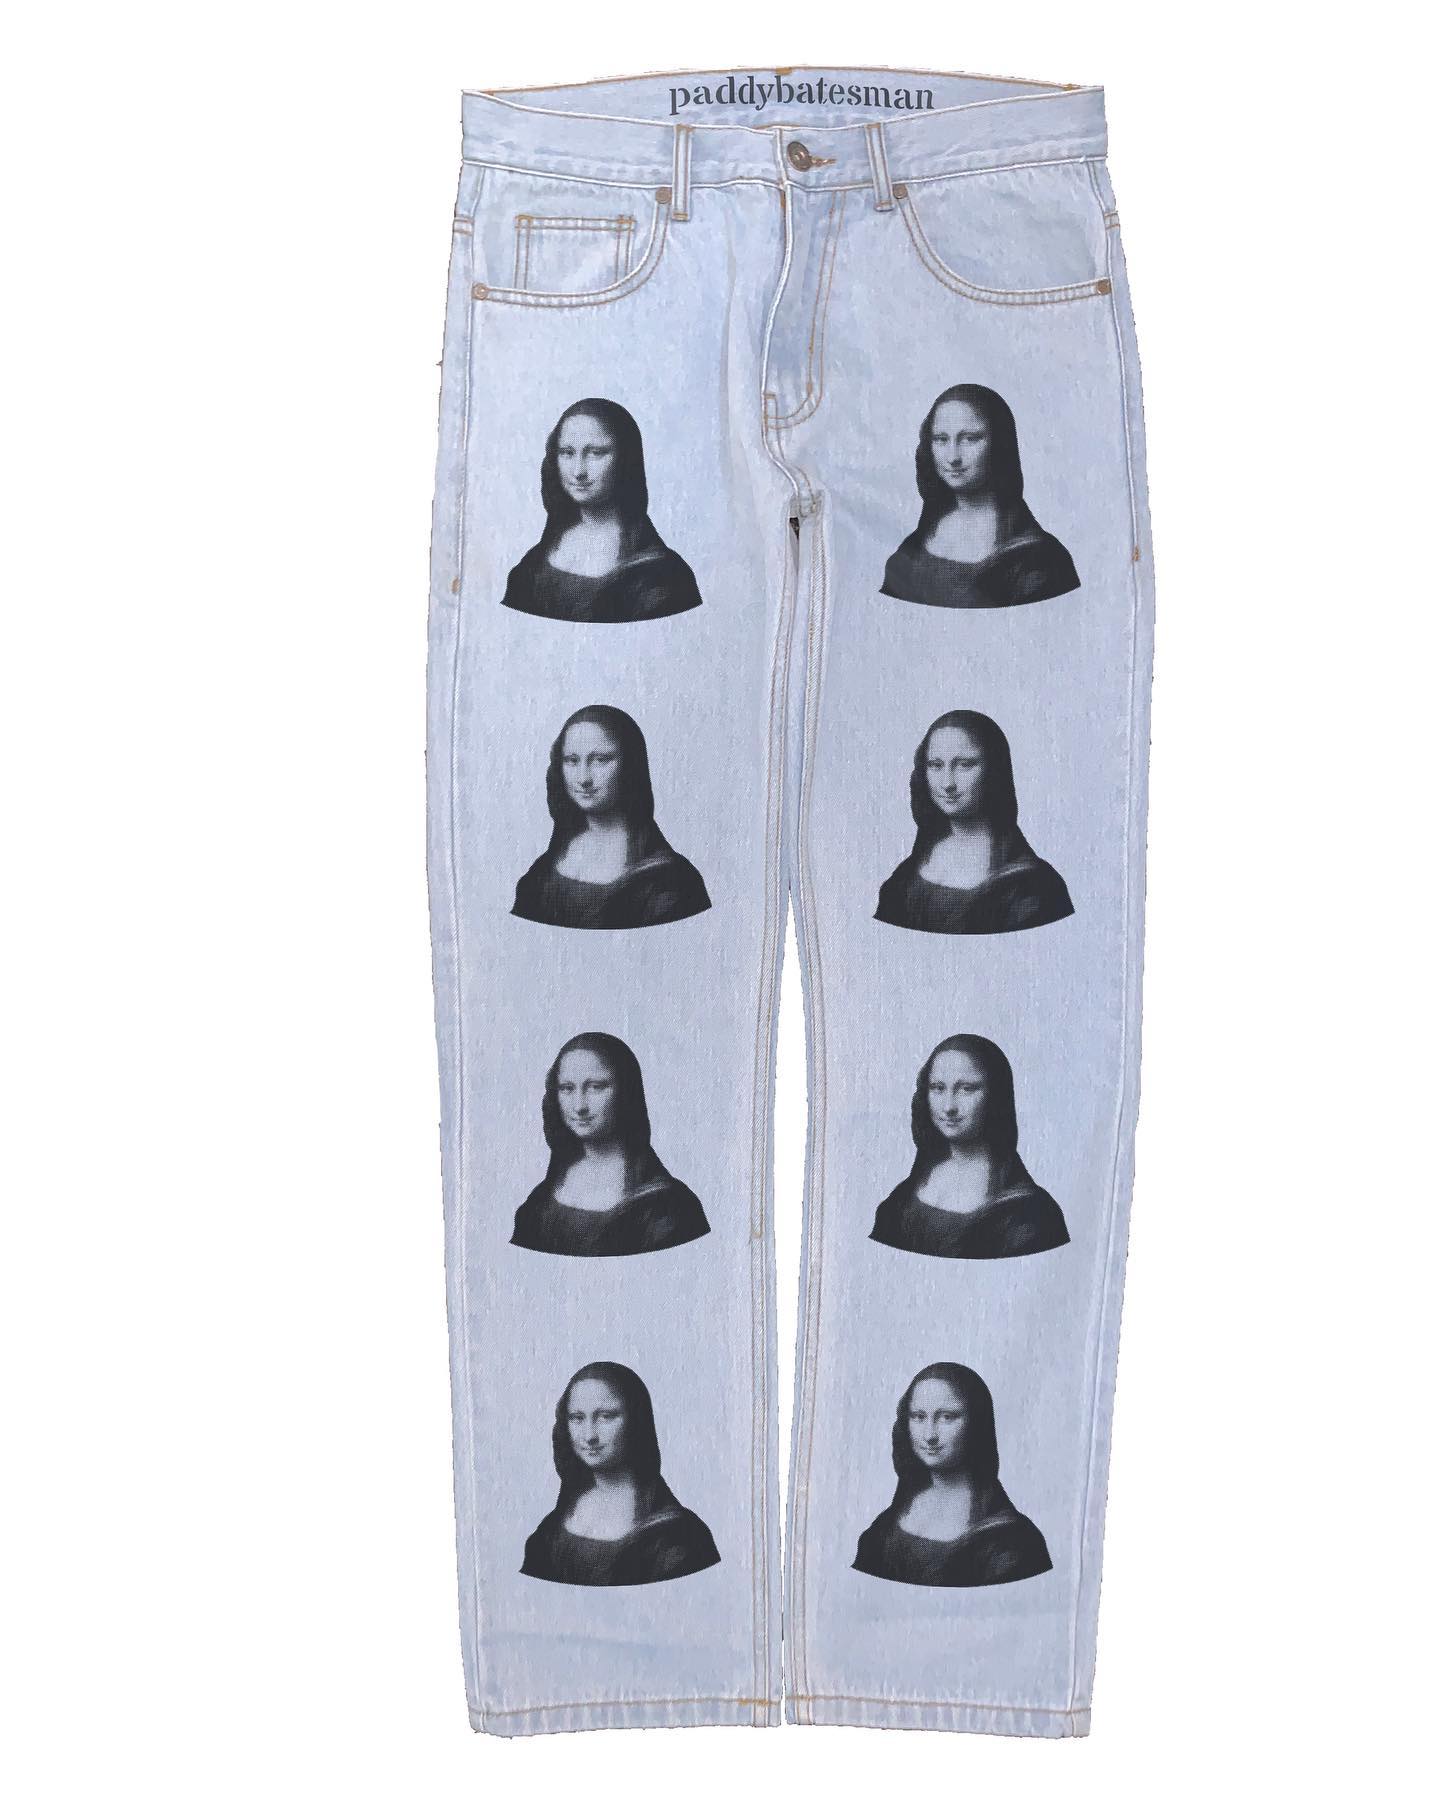 Stylish personalized printed pattern jeans